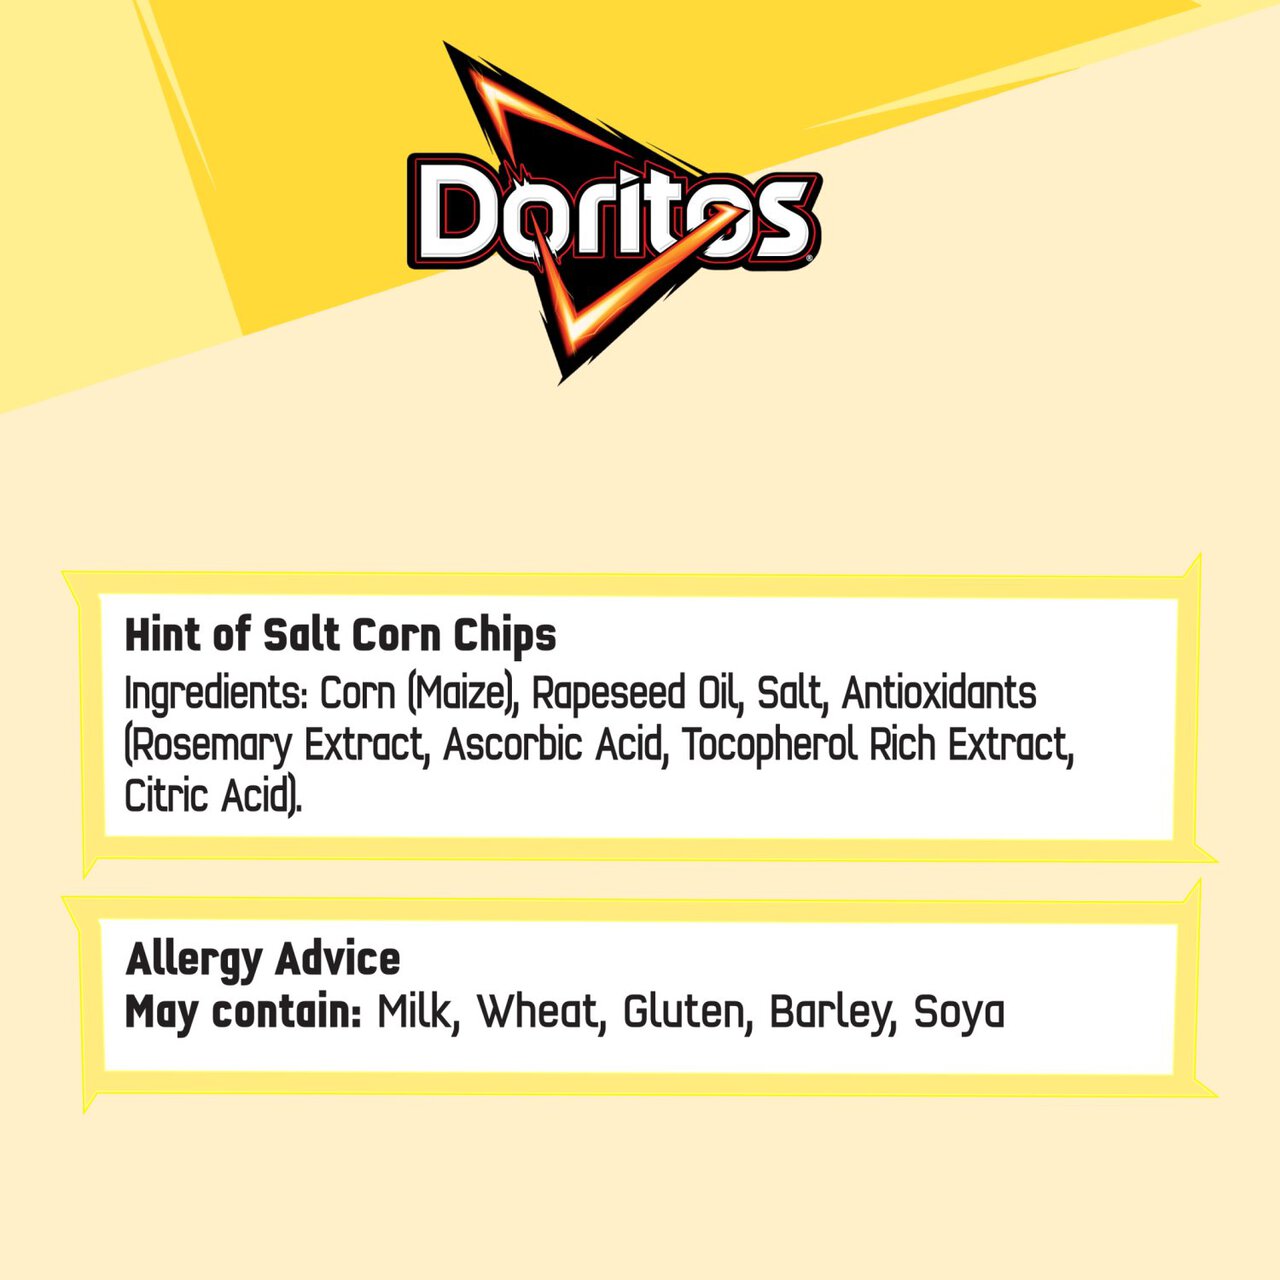 Doritos Dippers Hint of Salt Tortilla Chips Sharing Bag Crisps 230g